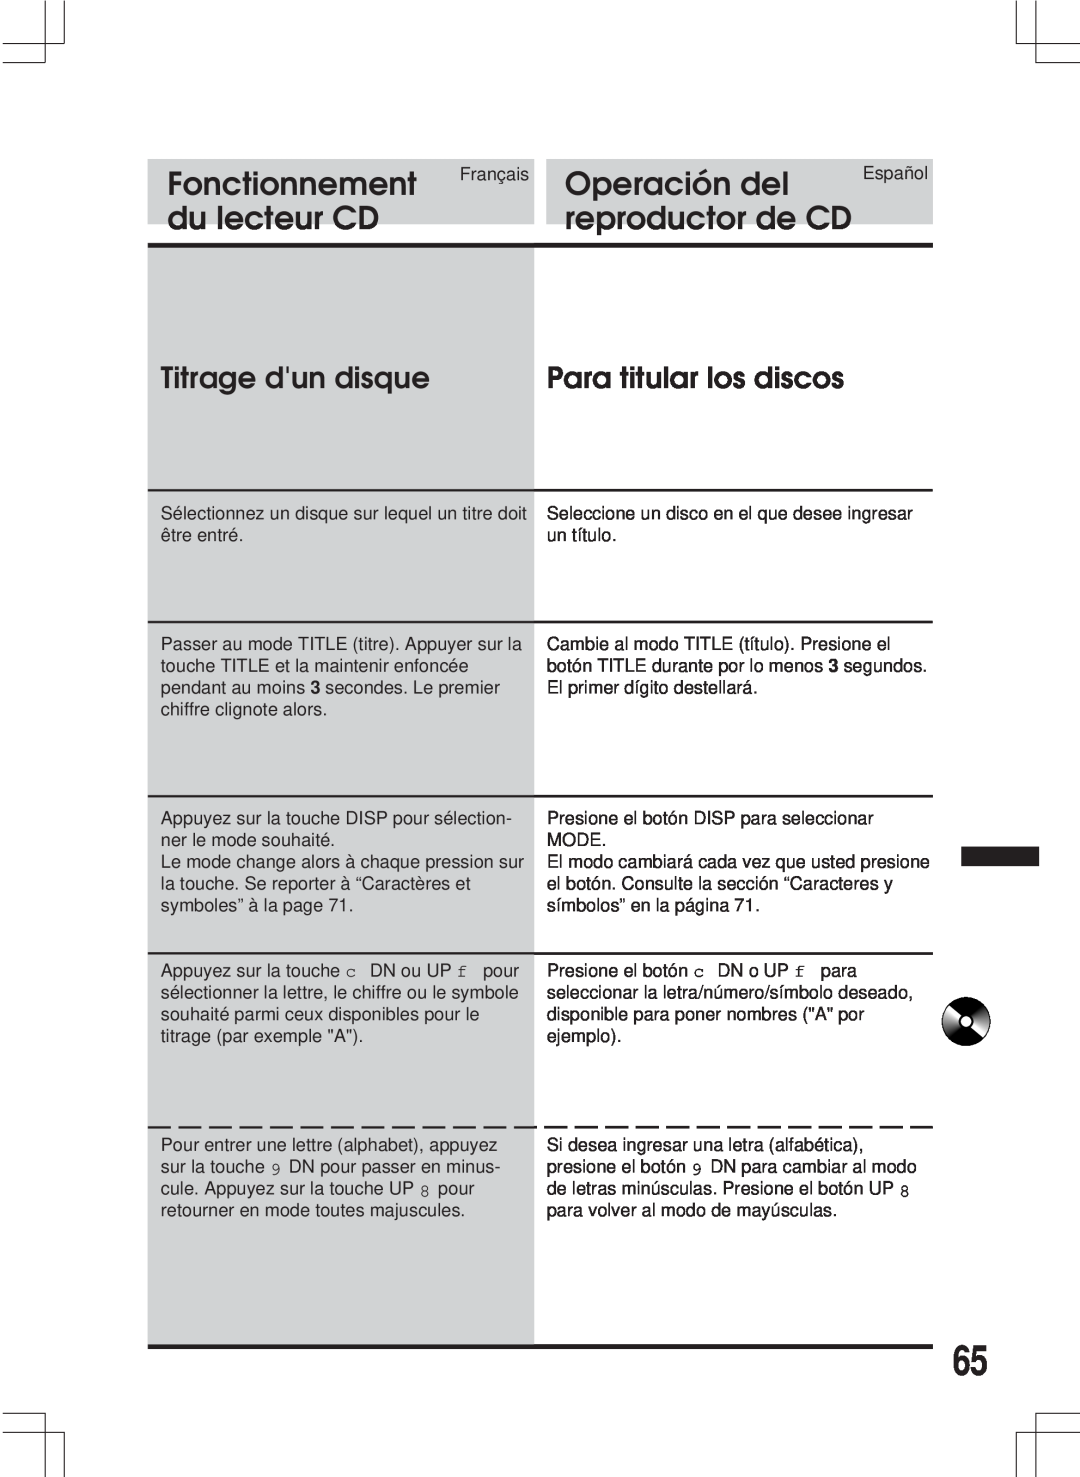 Alpine MDA-W890 owner manual Titrage dun disque, Para titular los discos, Fonctionnement, Operación del, du lecteur CD 